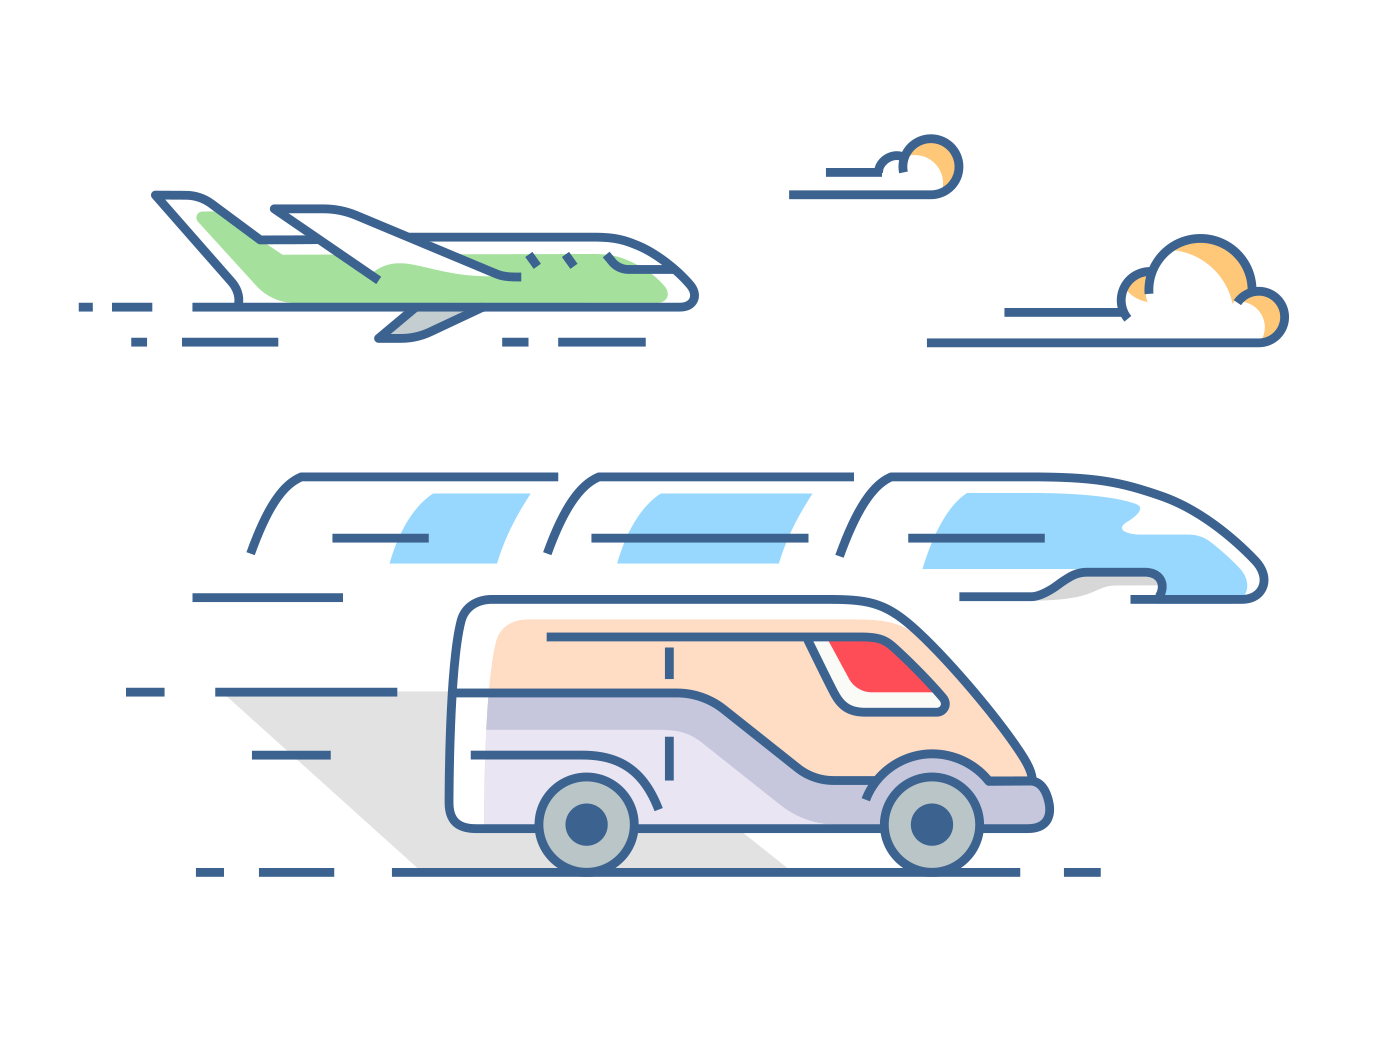 Air, road and rail transport illustration